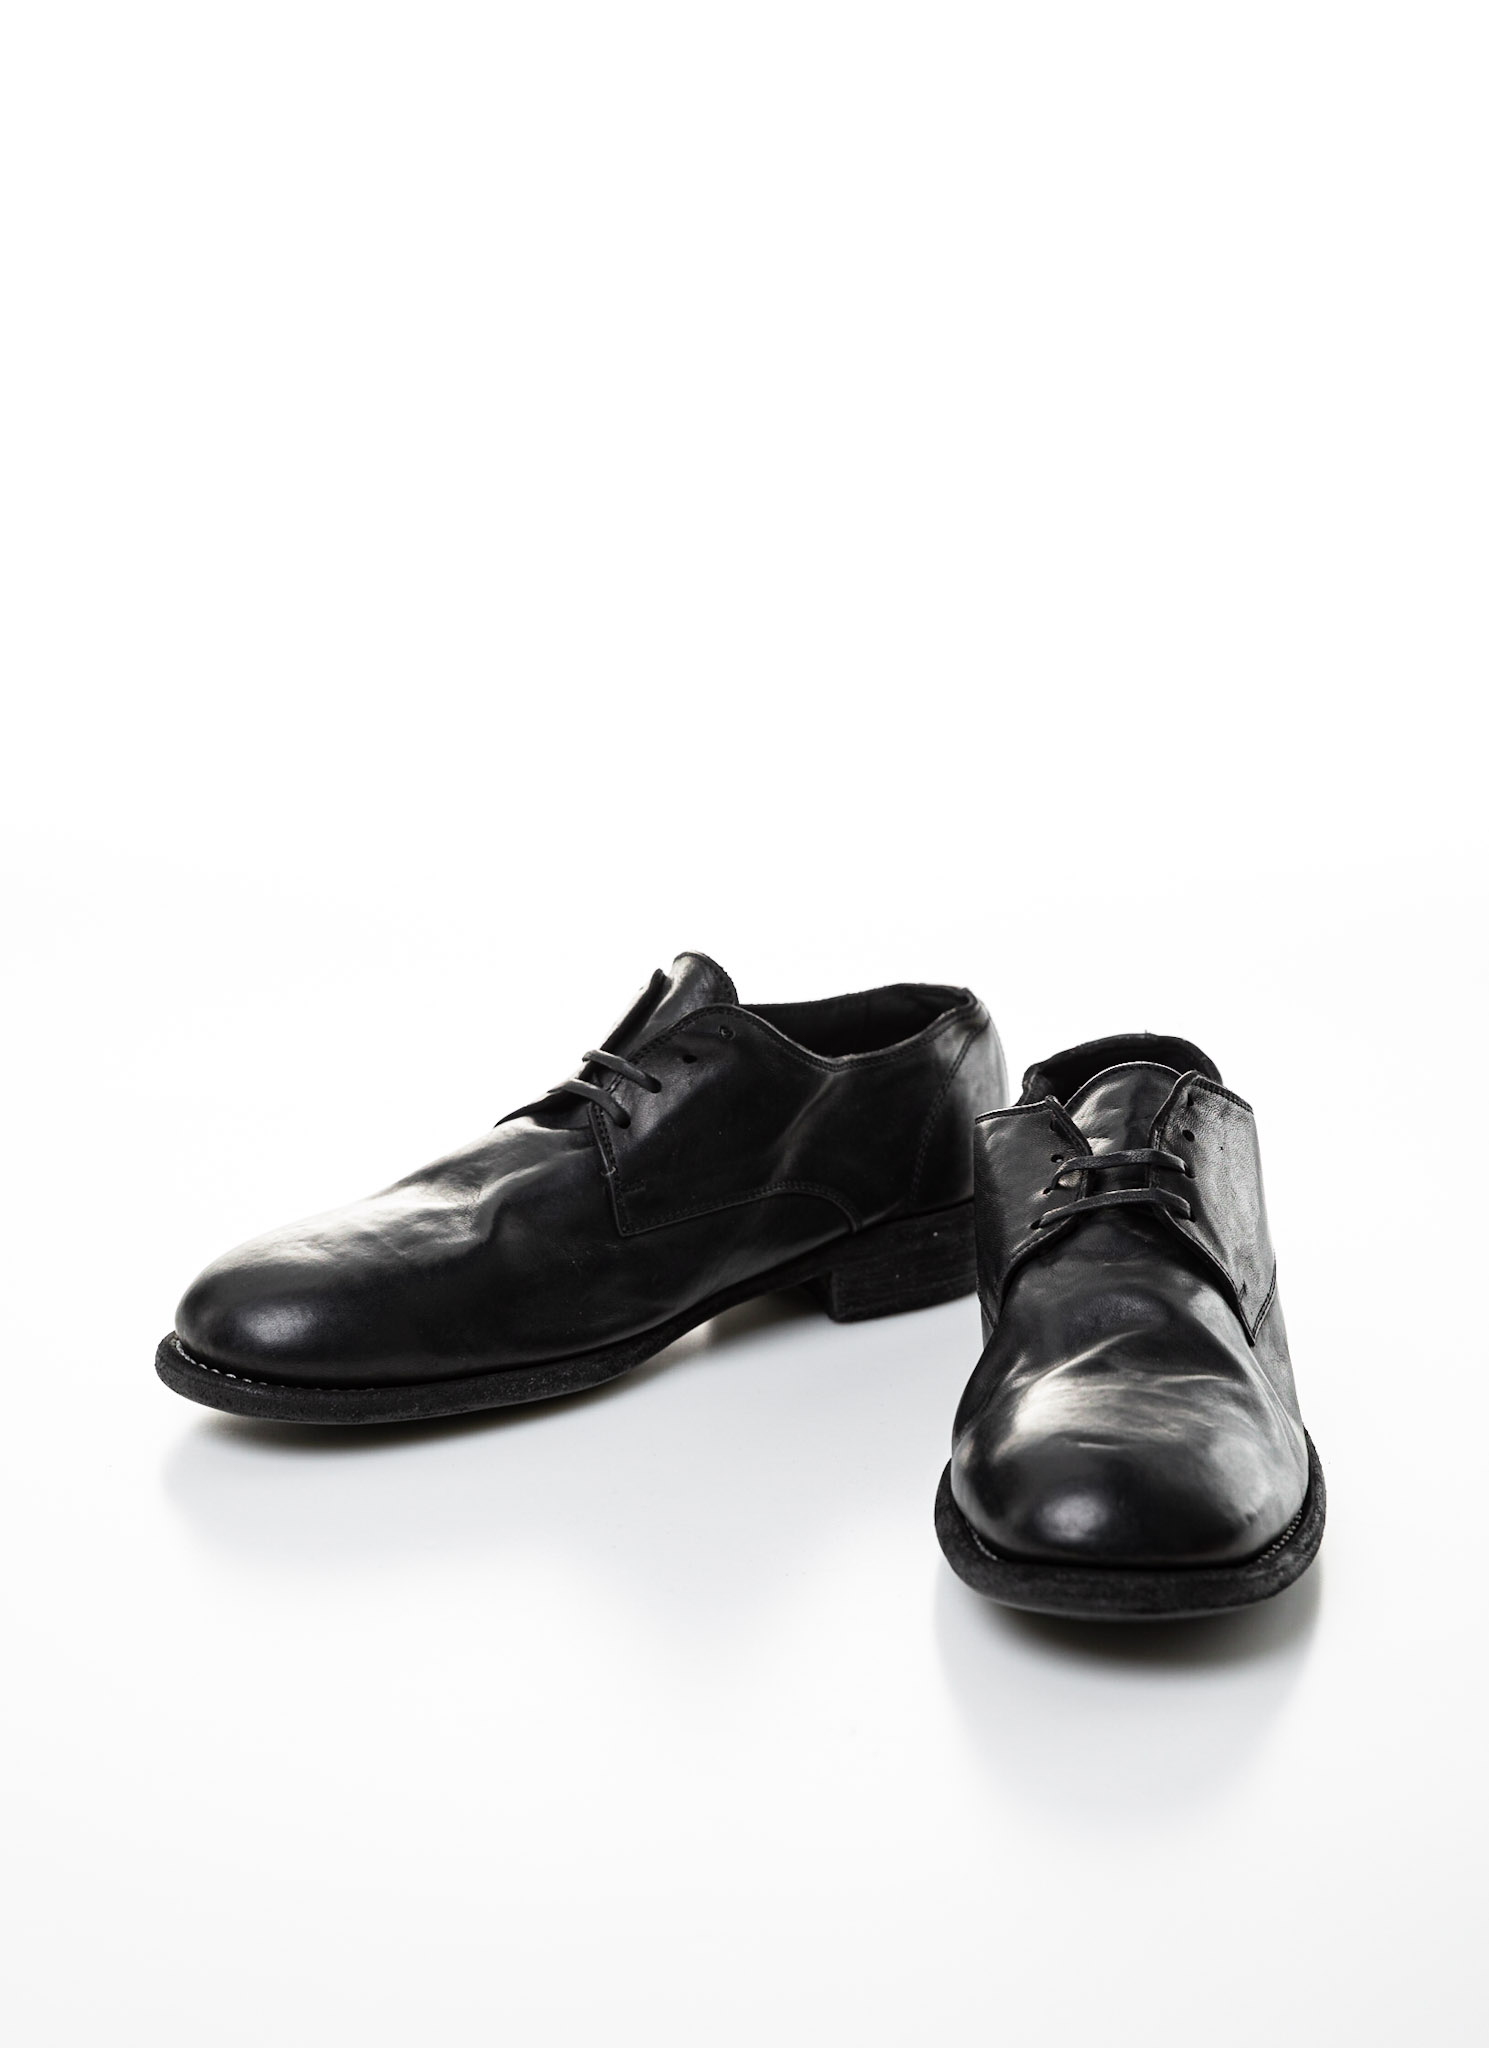 hide-m  GUIDI 992, Classic Derby Shoe black horse leather